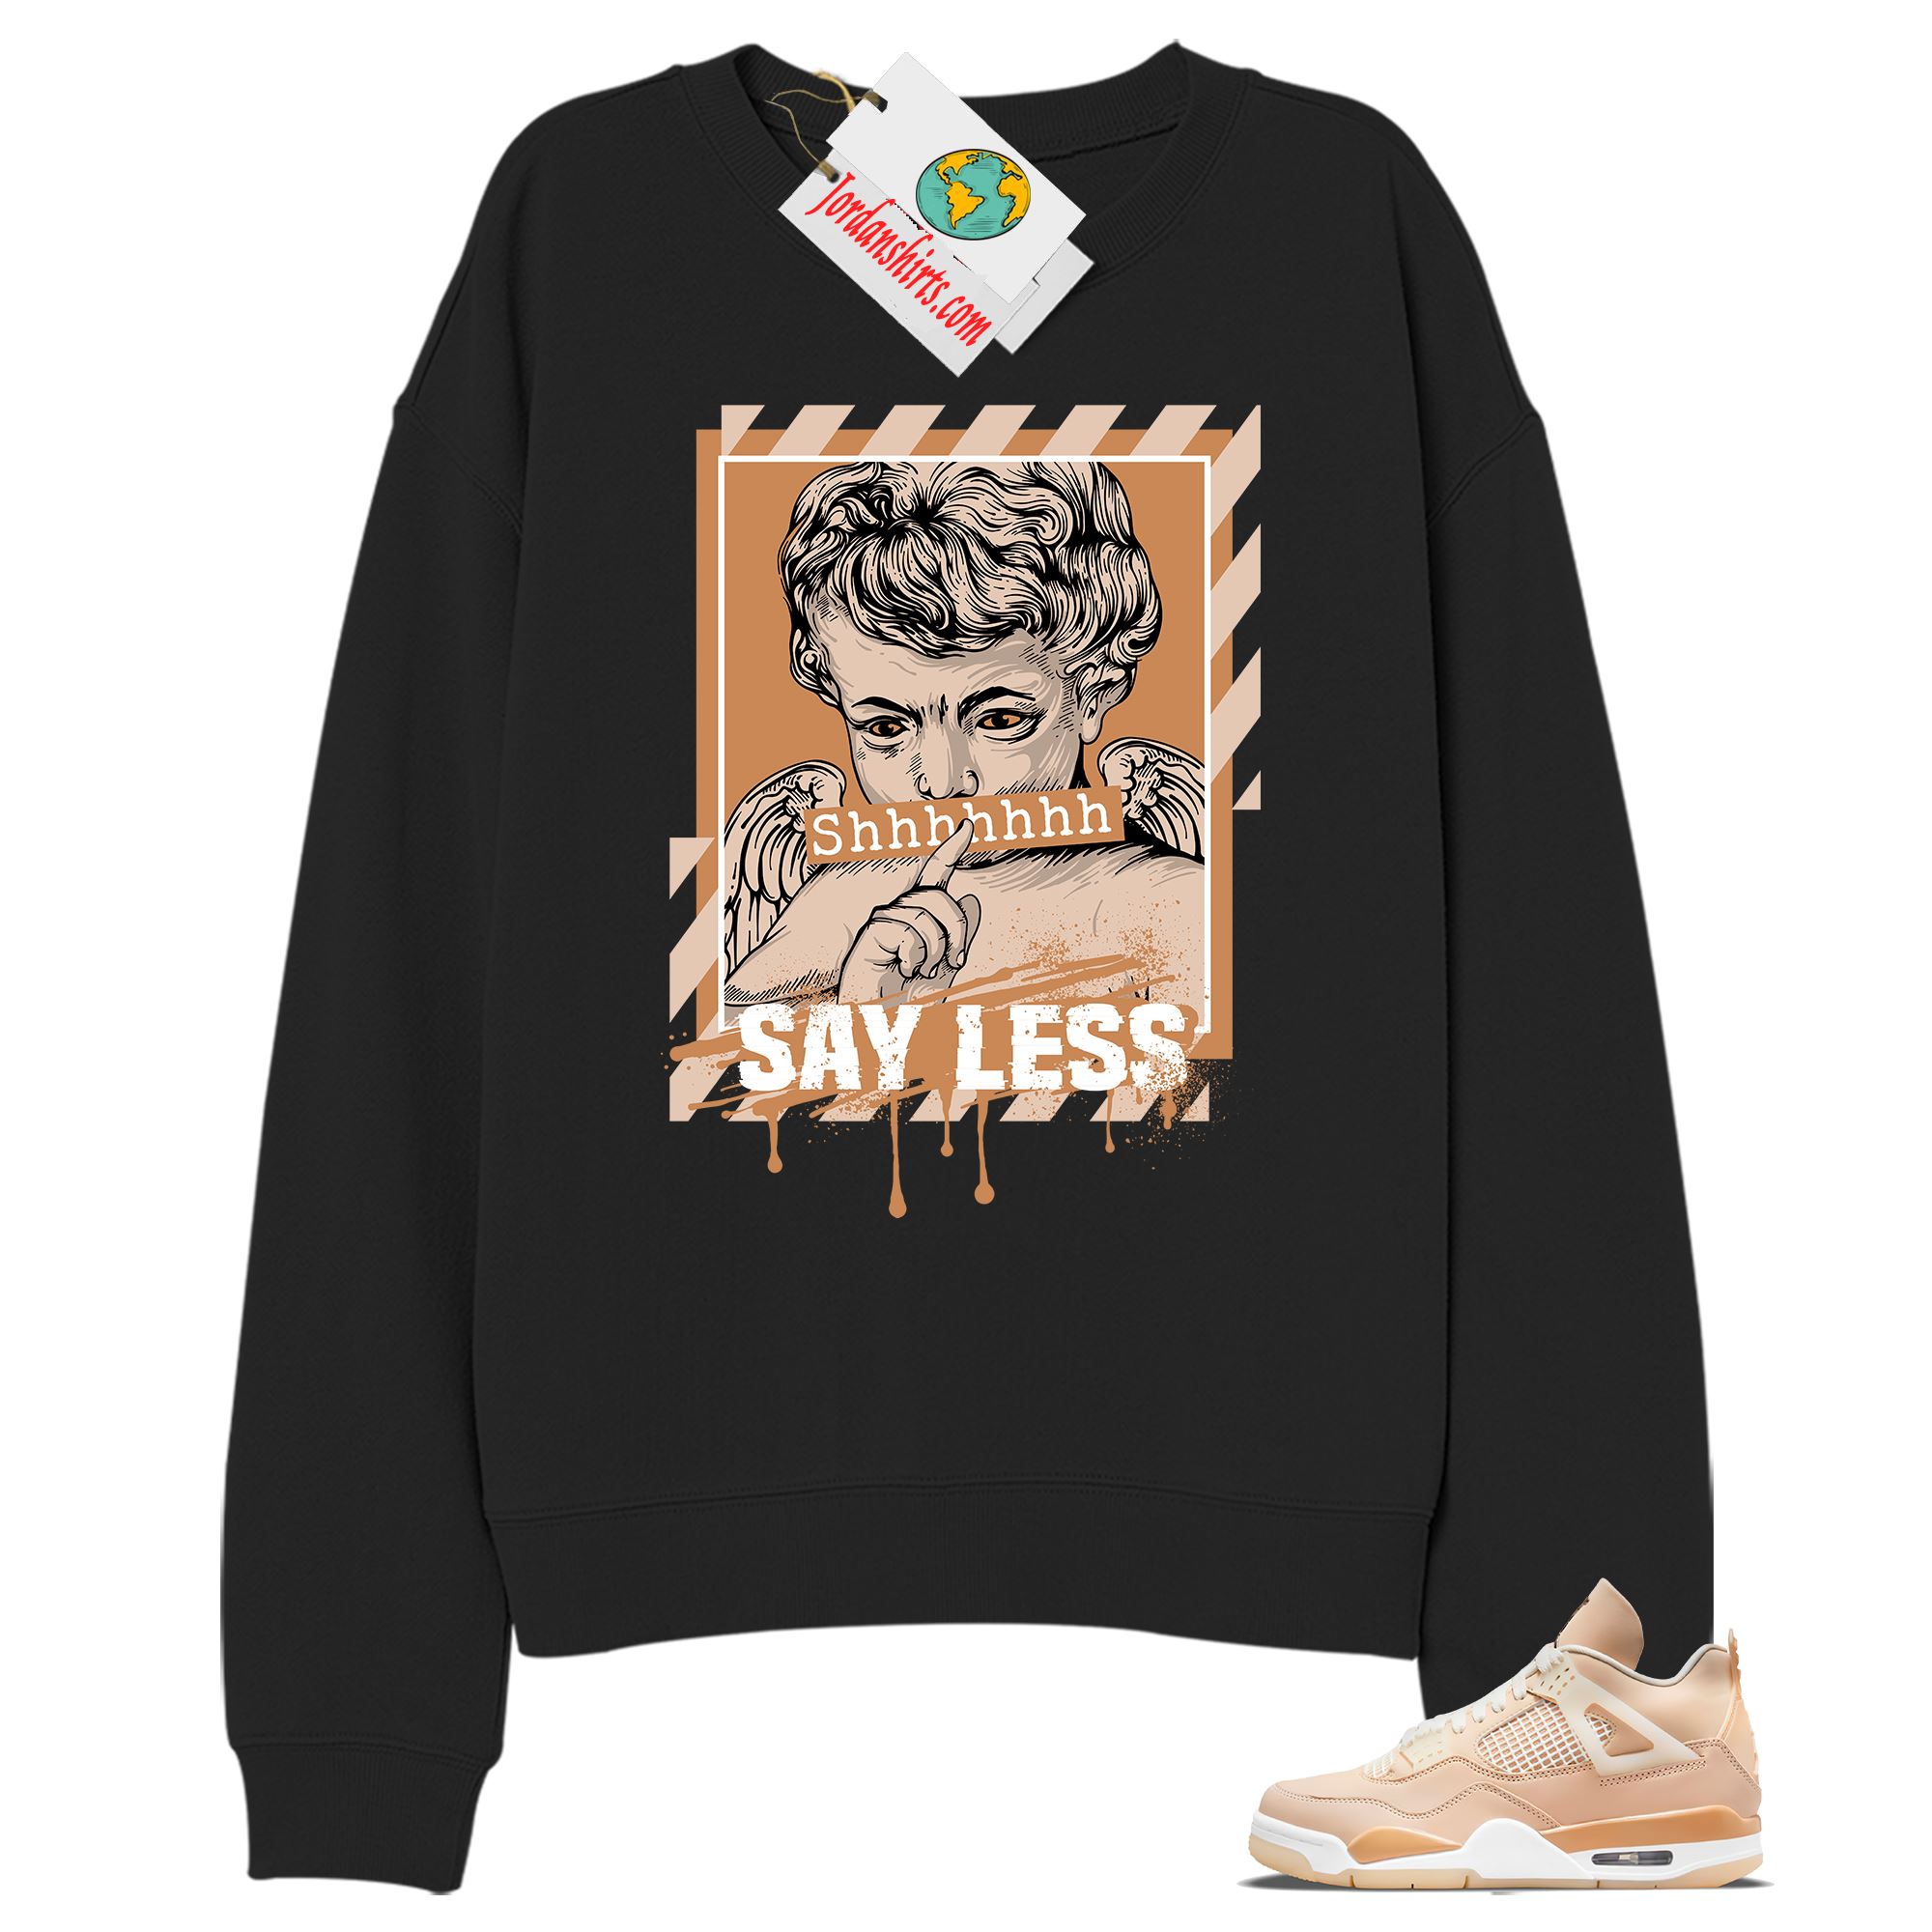 Jordan 4 Sweatshirt, Say Less Angel Black Sweatshirt Air Jordan 4 Shimmer 4s Size Up To 5xl